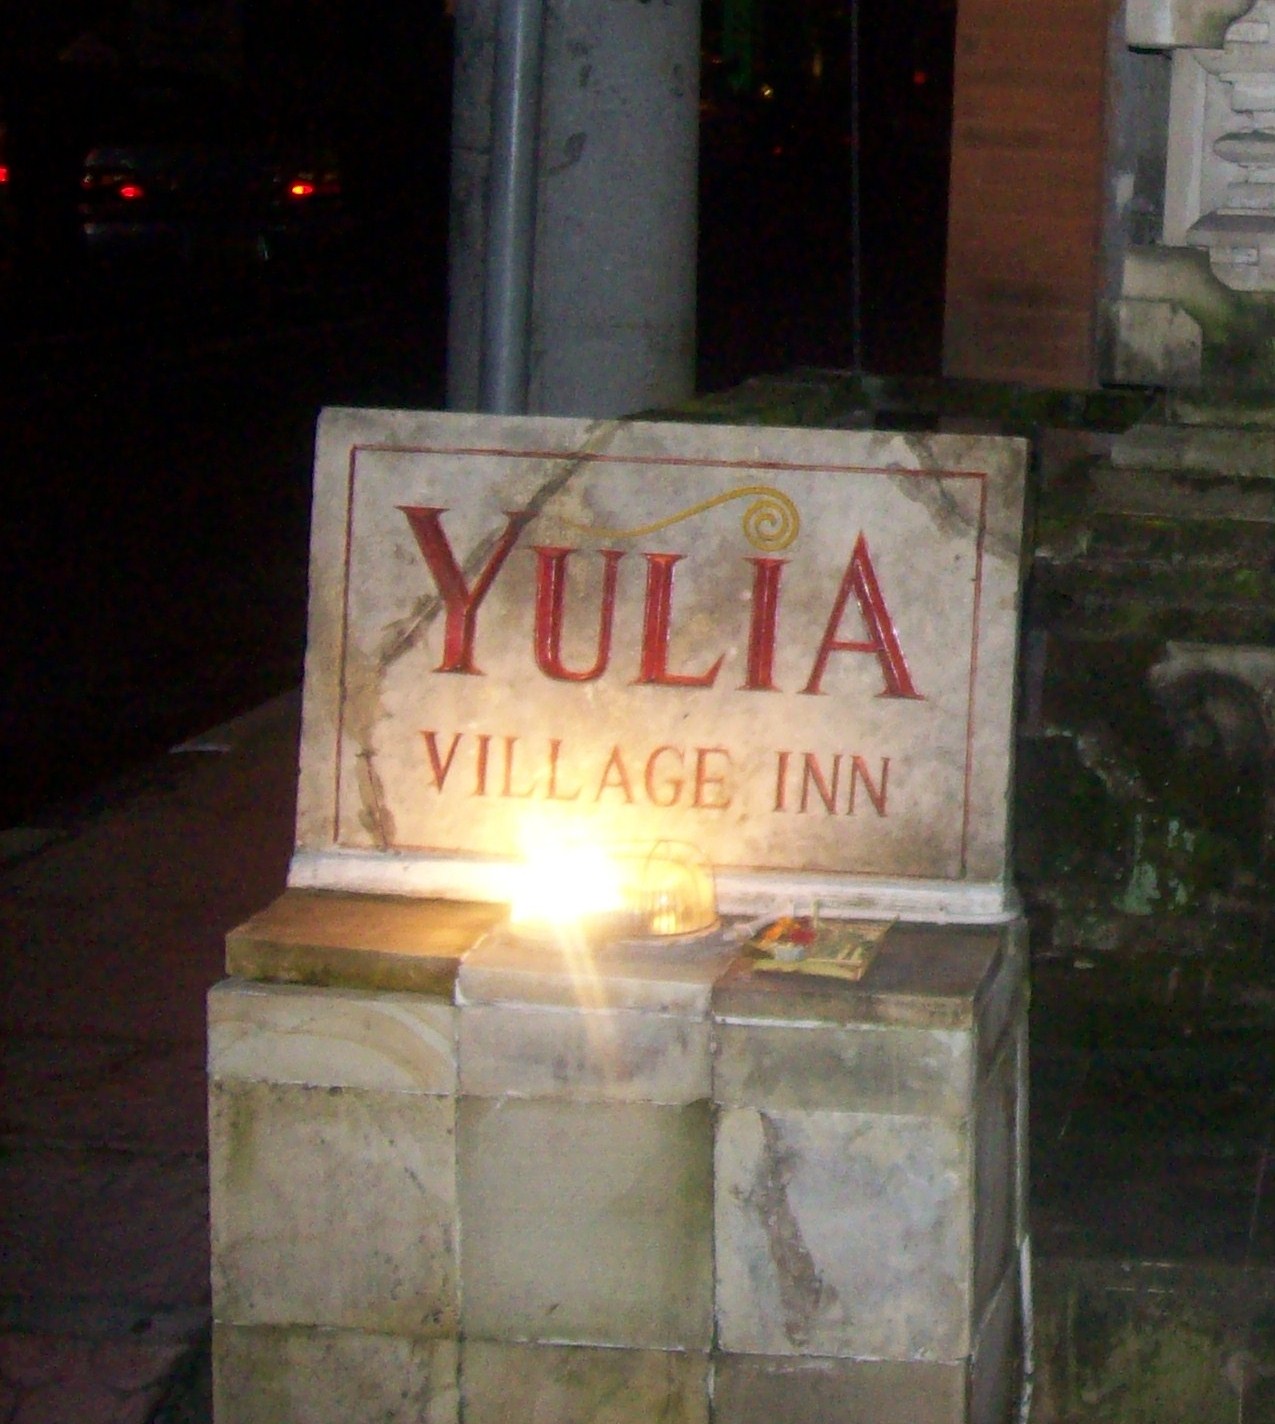 Yulia village inn